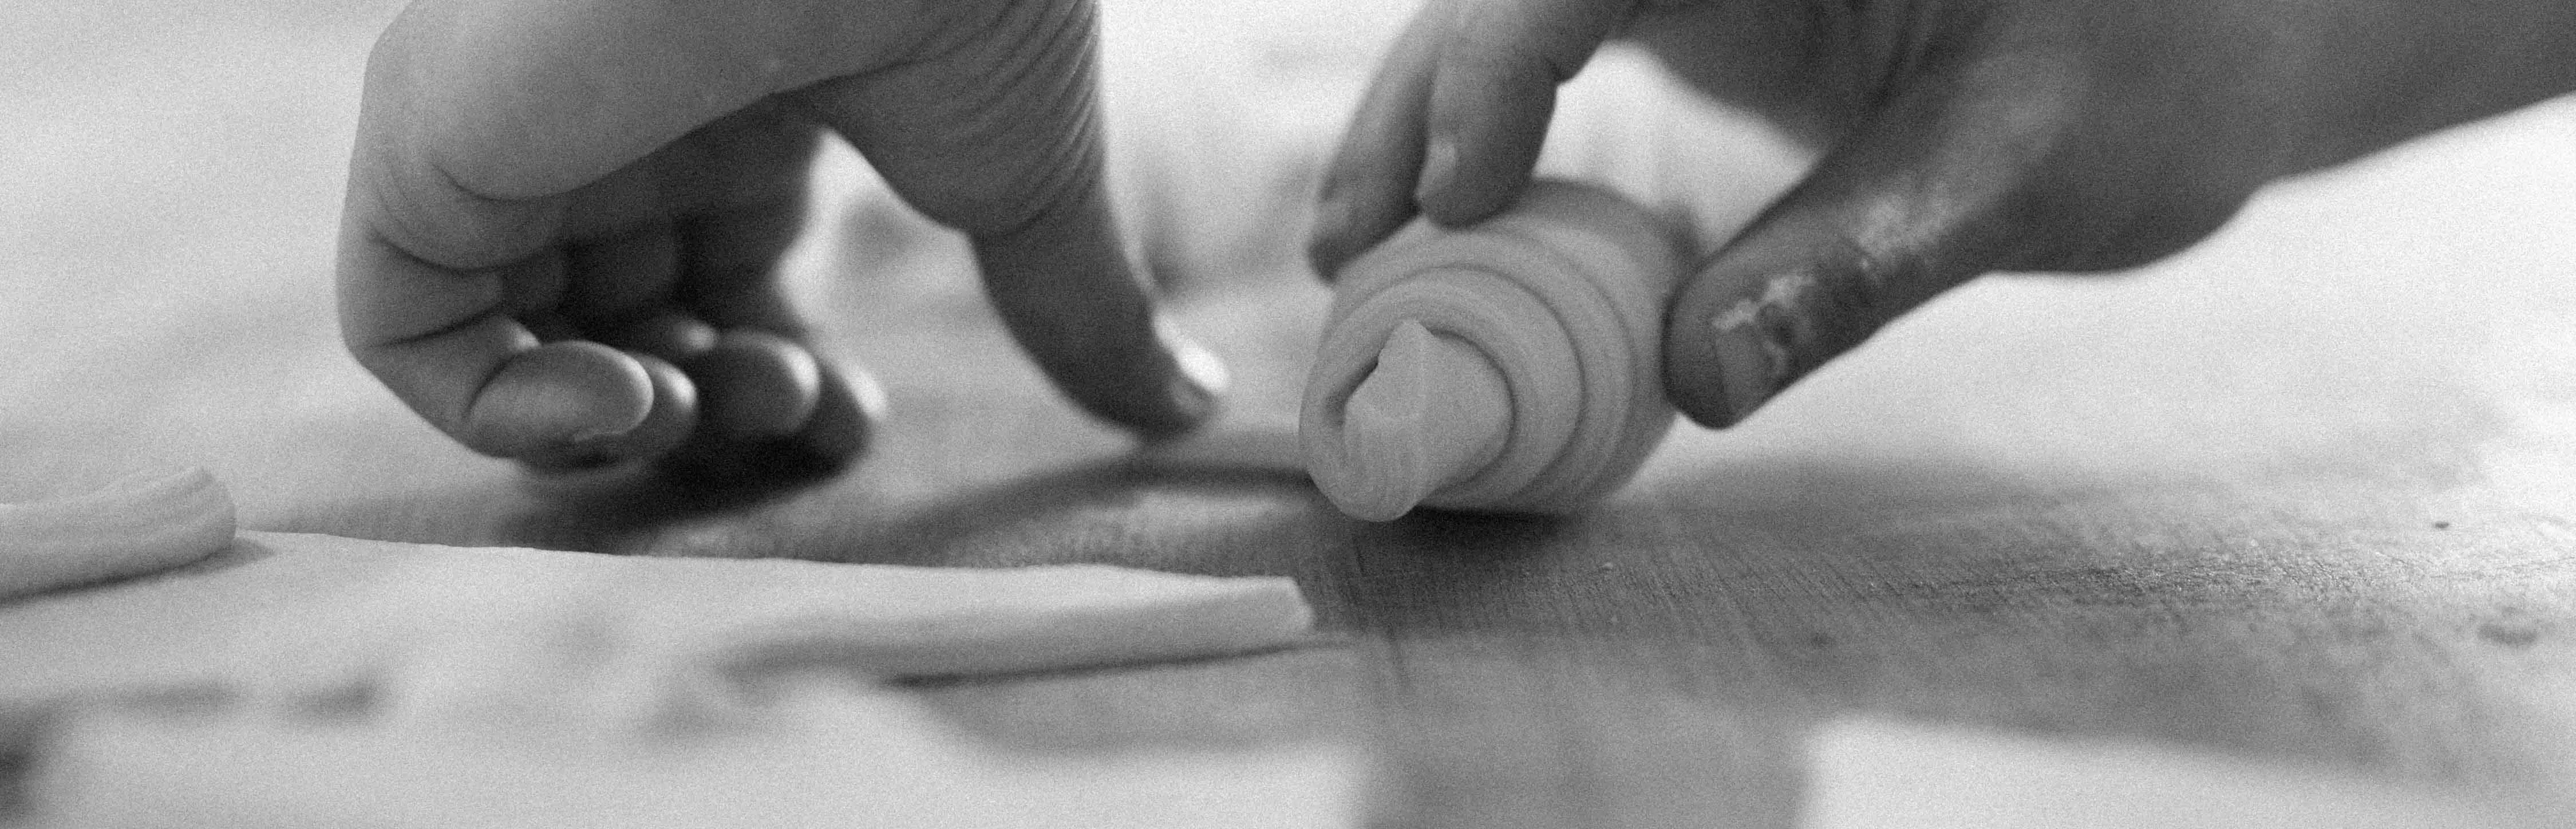 Rolling dough on wood